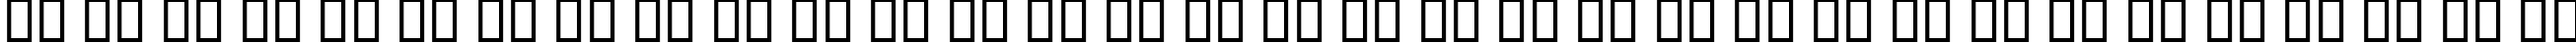 Пример написания русского алфавита шрифтом B Zaman